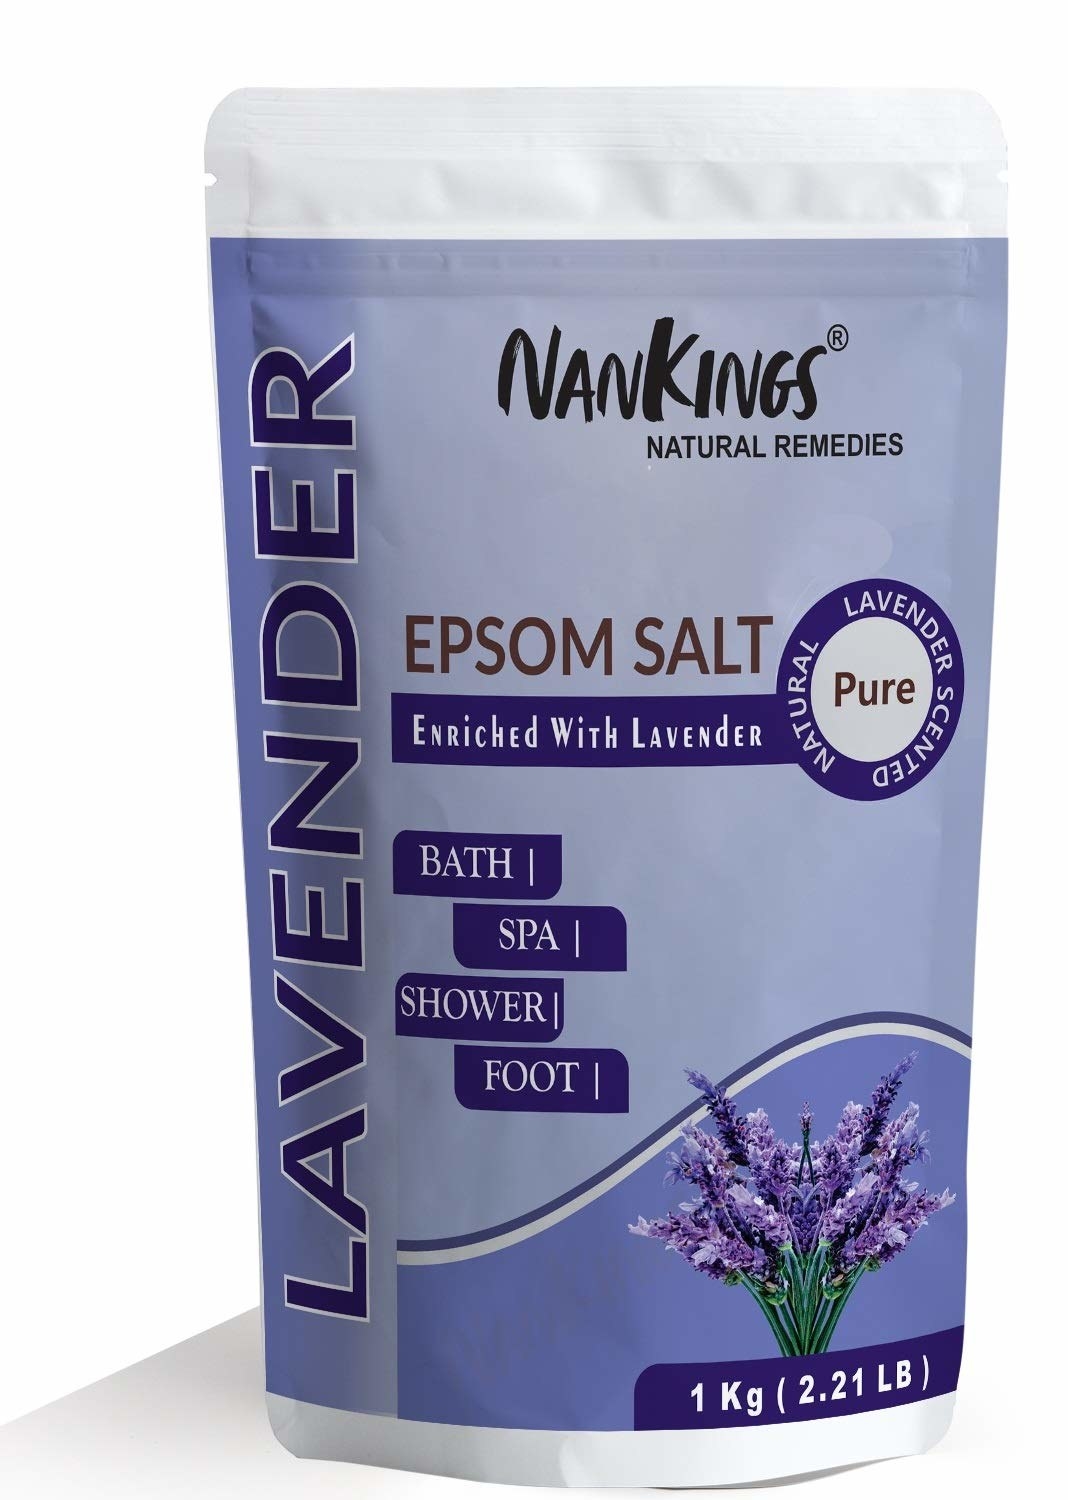 Epsom Bath Salt packaging